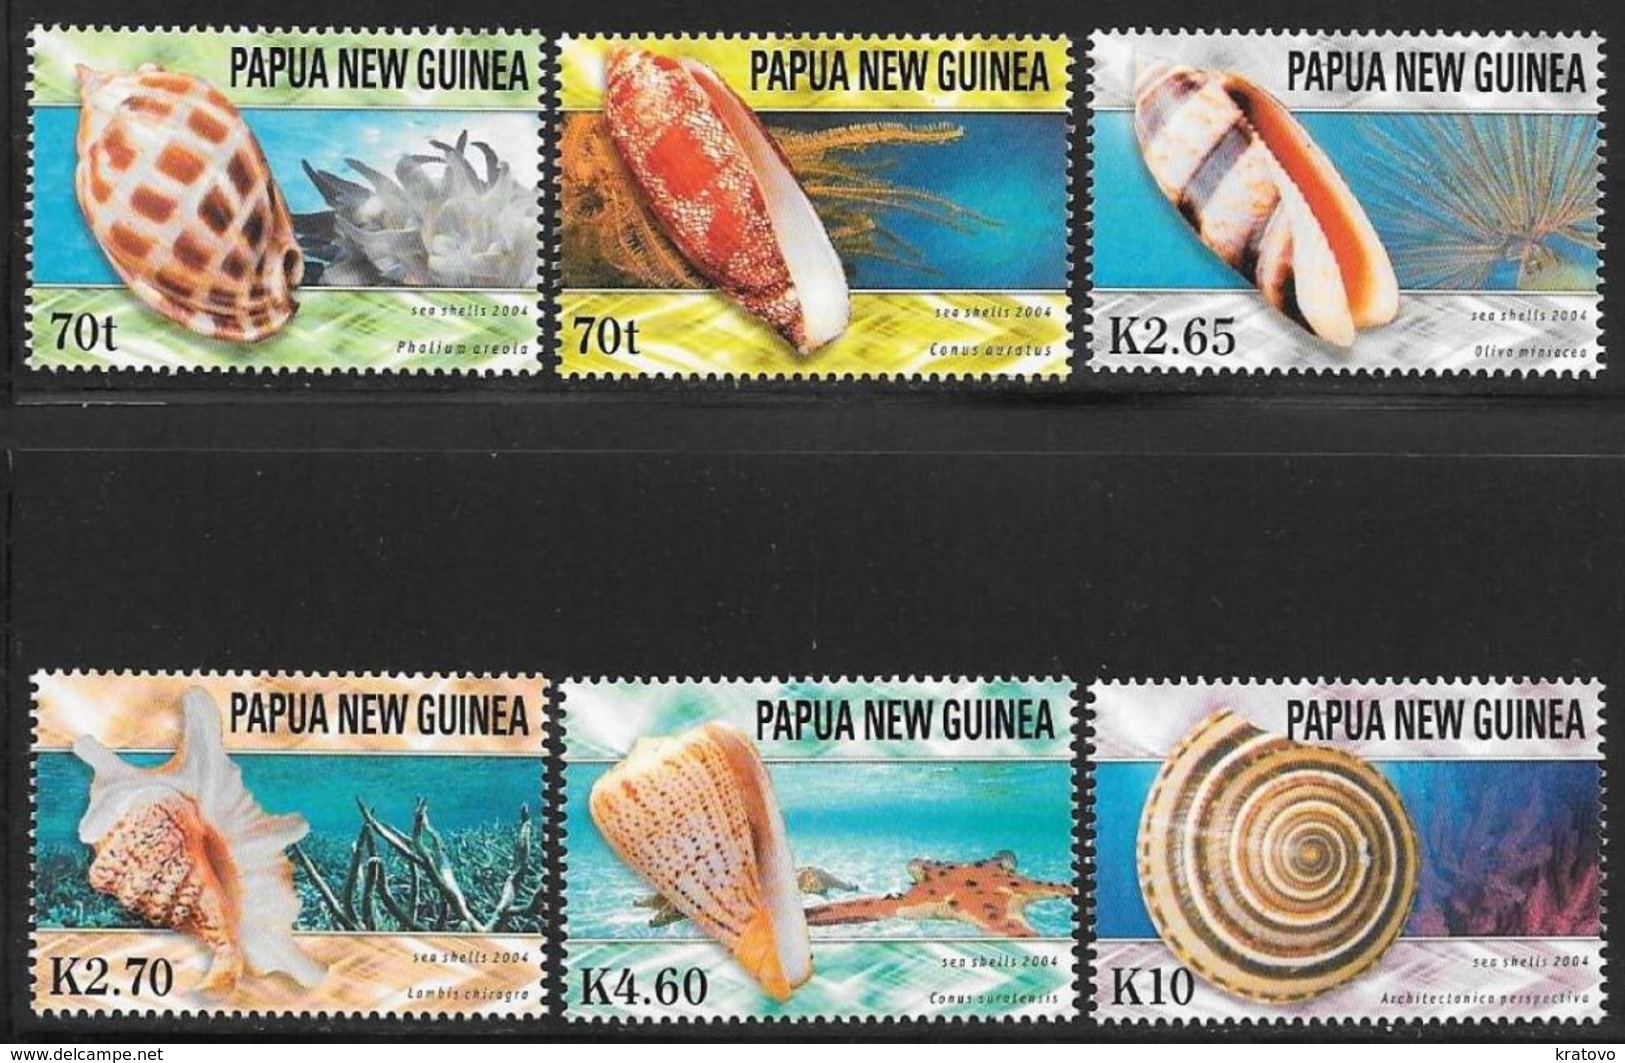 PAPUA NEW GUINEA 2004 Mi # 1099 - 1104 MARINE FAUNA Seashells MNH - Papua New Guinea